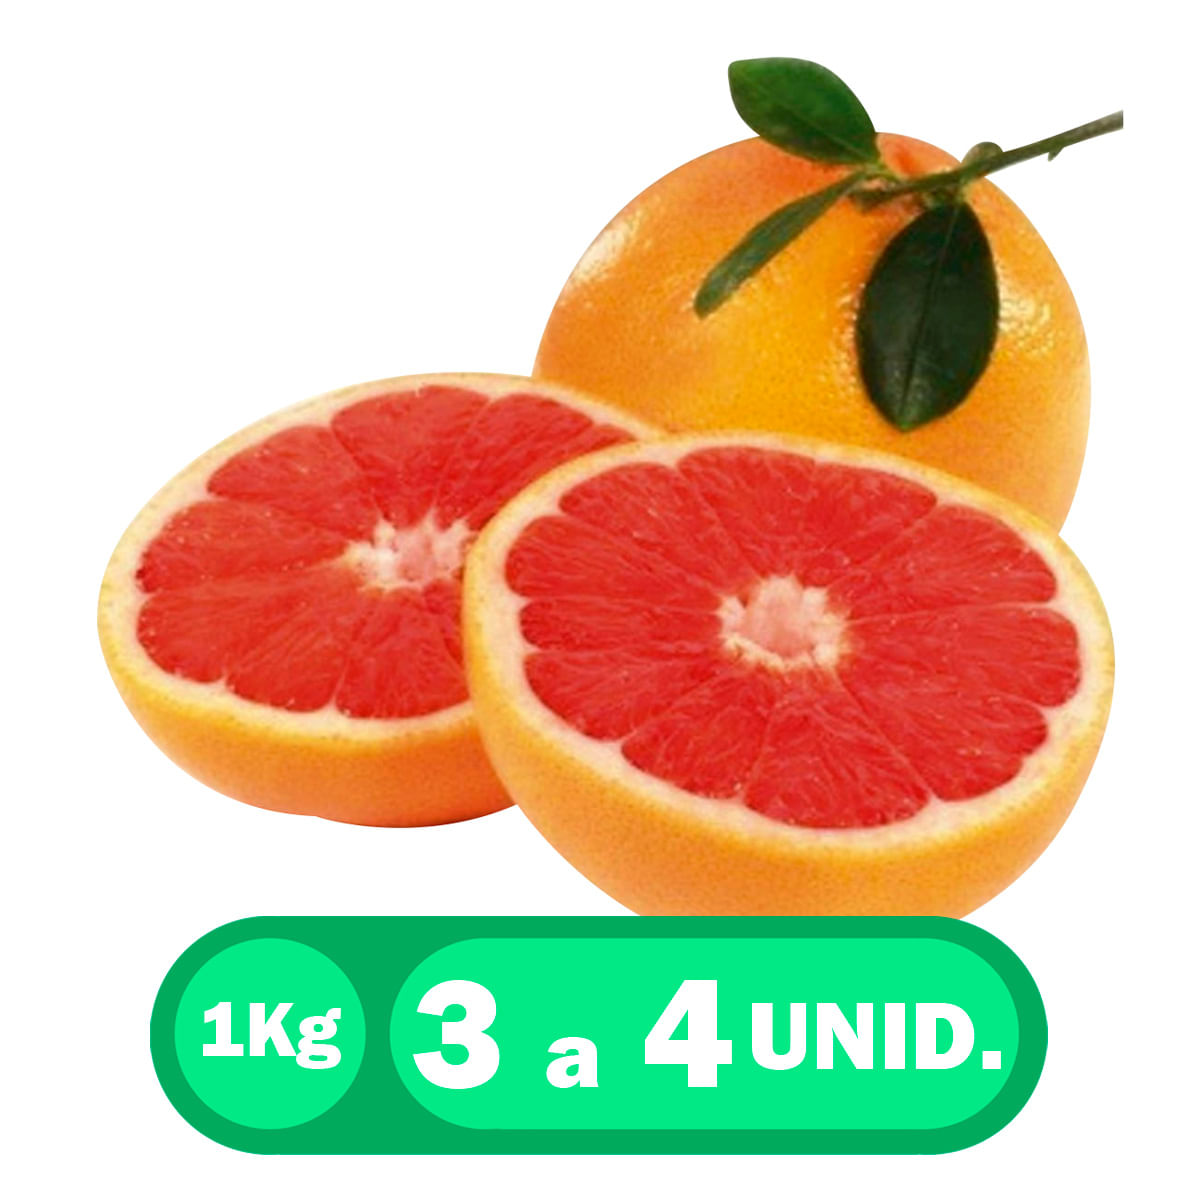 laranja-baia-cara-cara-alfa-citrus-carrefour-aprox-1kg-1.jpg